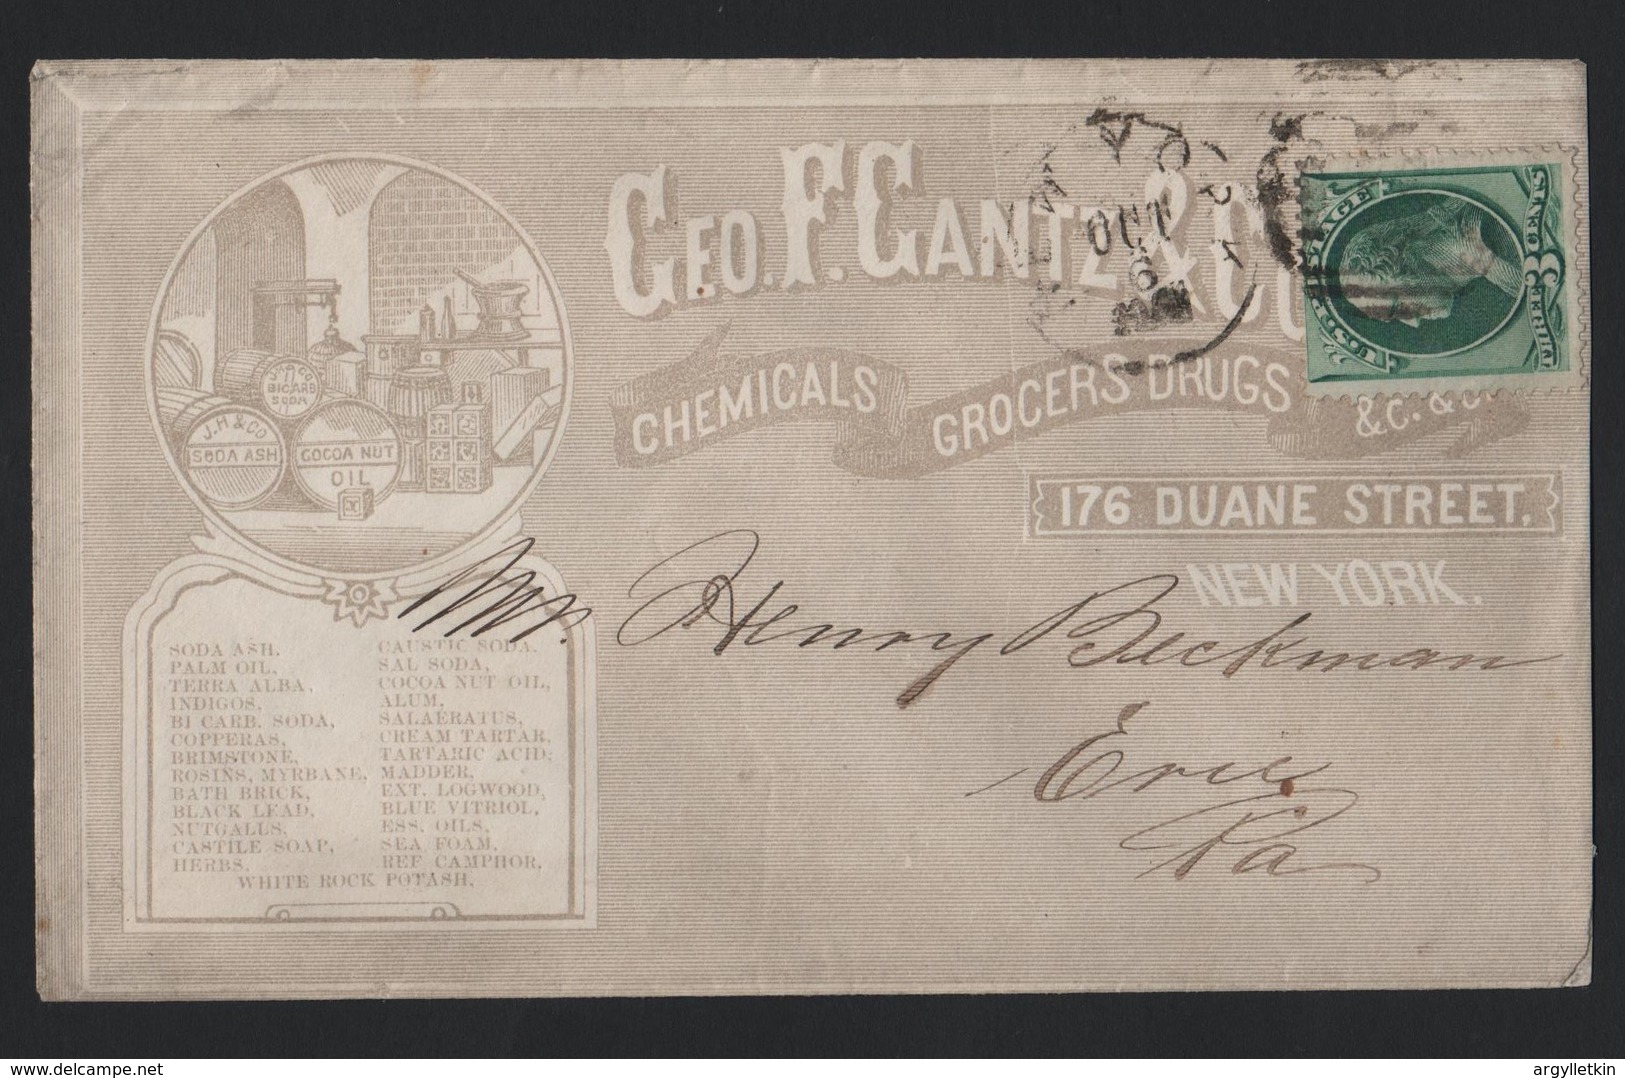 U.S.A. ADVERTISING NEW YORK GEO GANTZ CHEMICALS SODA SOAP COCONUT OIL 1870 - Souvenirkarten